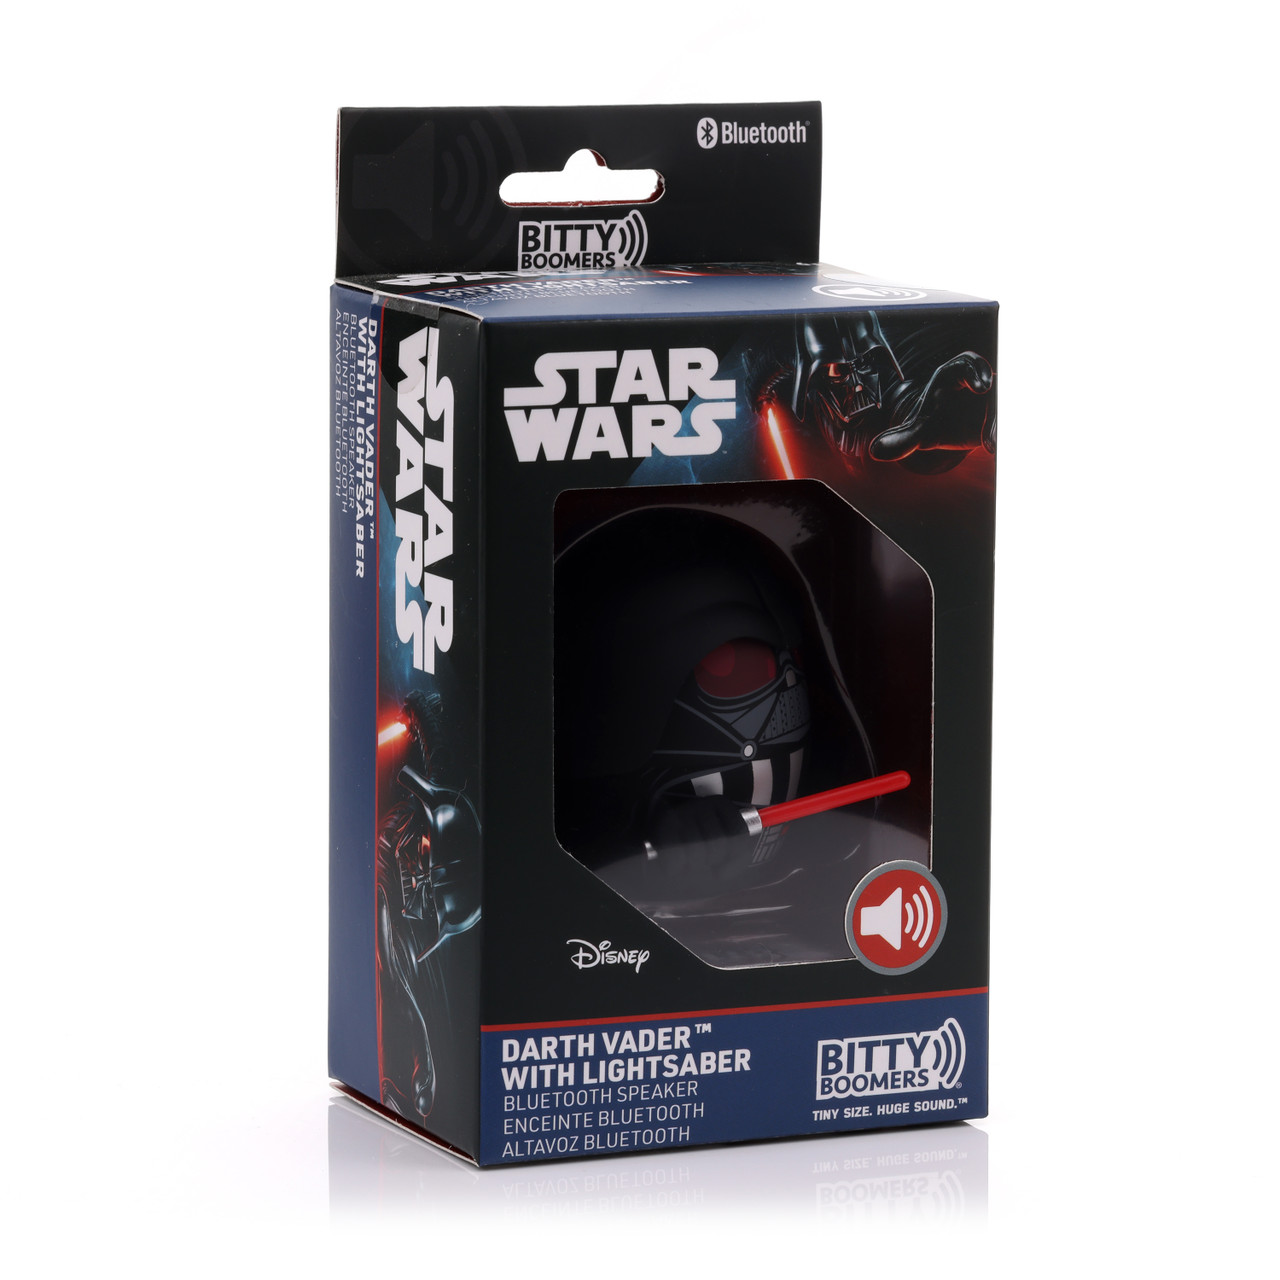 Star Wars Darth Vader with Light Saber Bitty Boomer Bluetooth Portable Speaker